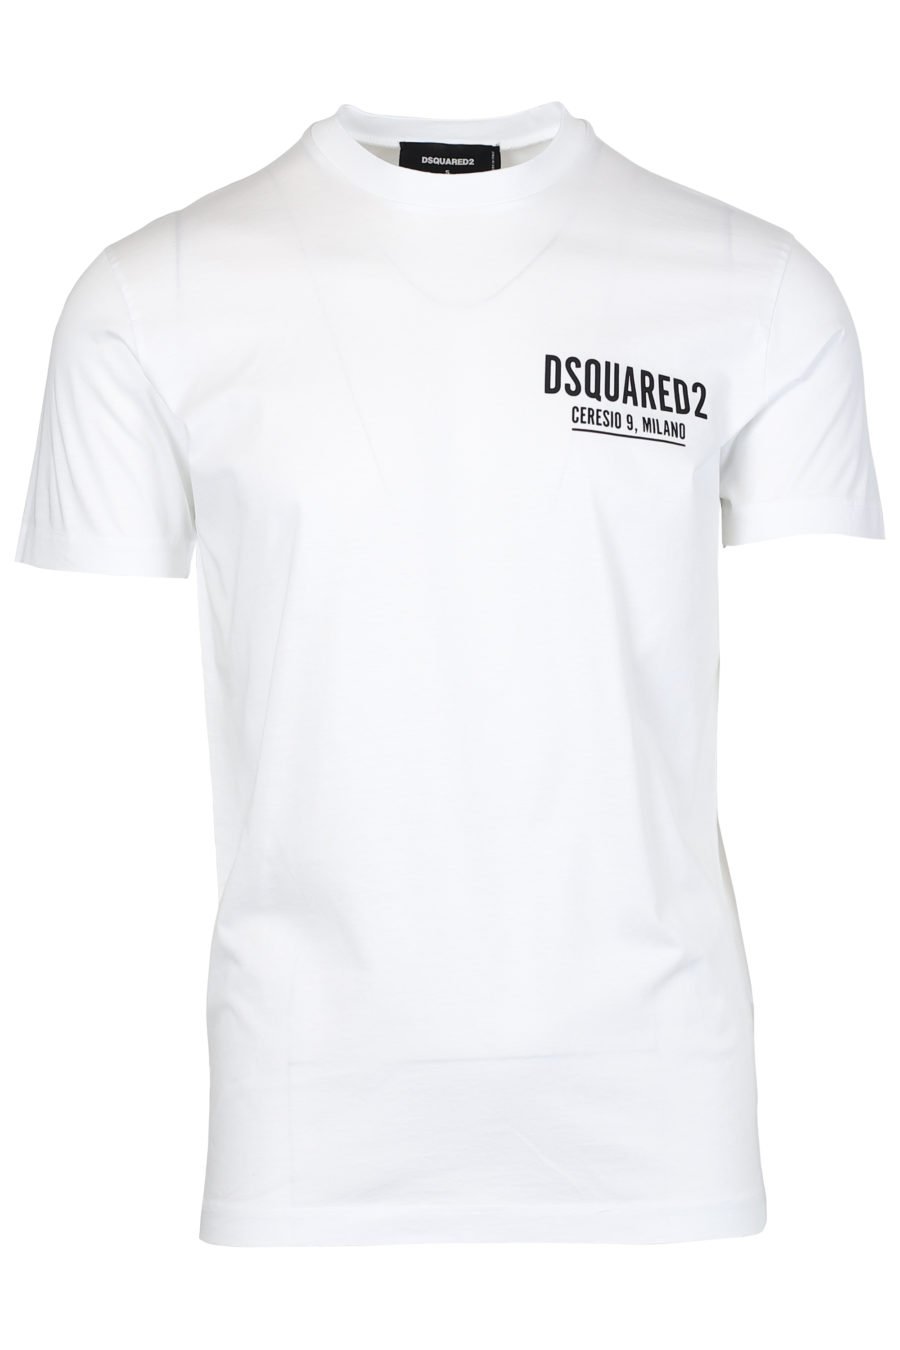 Camiseta blanca con logo pequeño "Ceresio 9" - IMG 2435